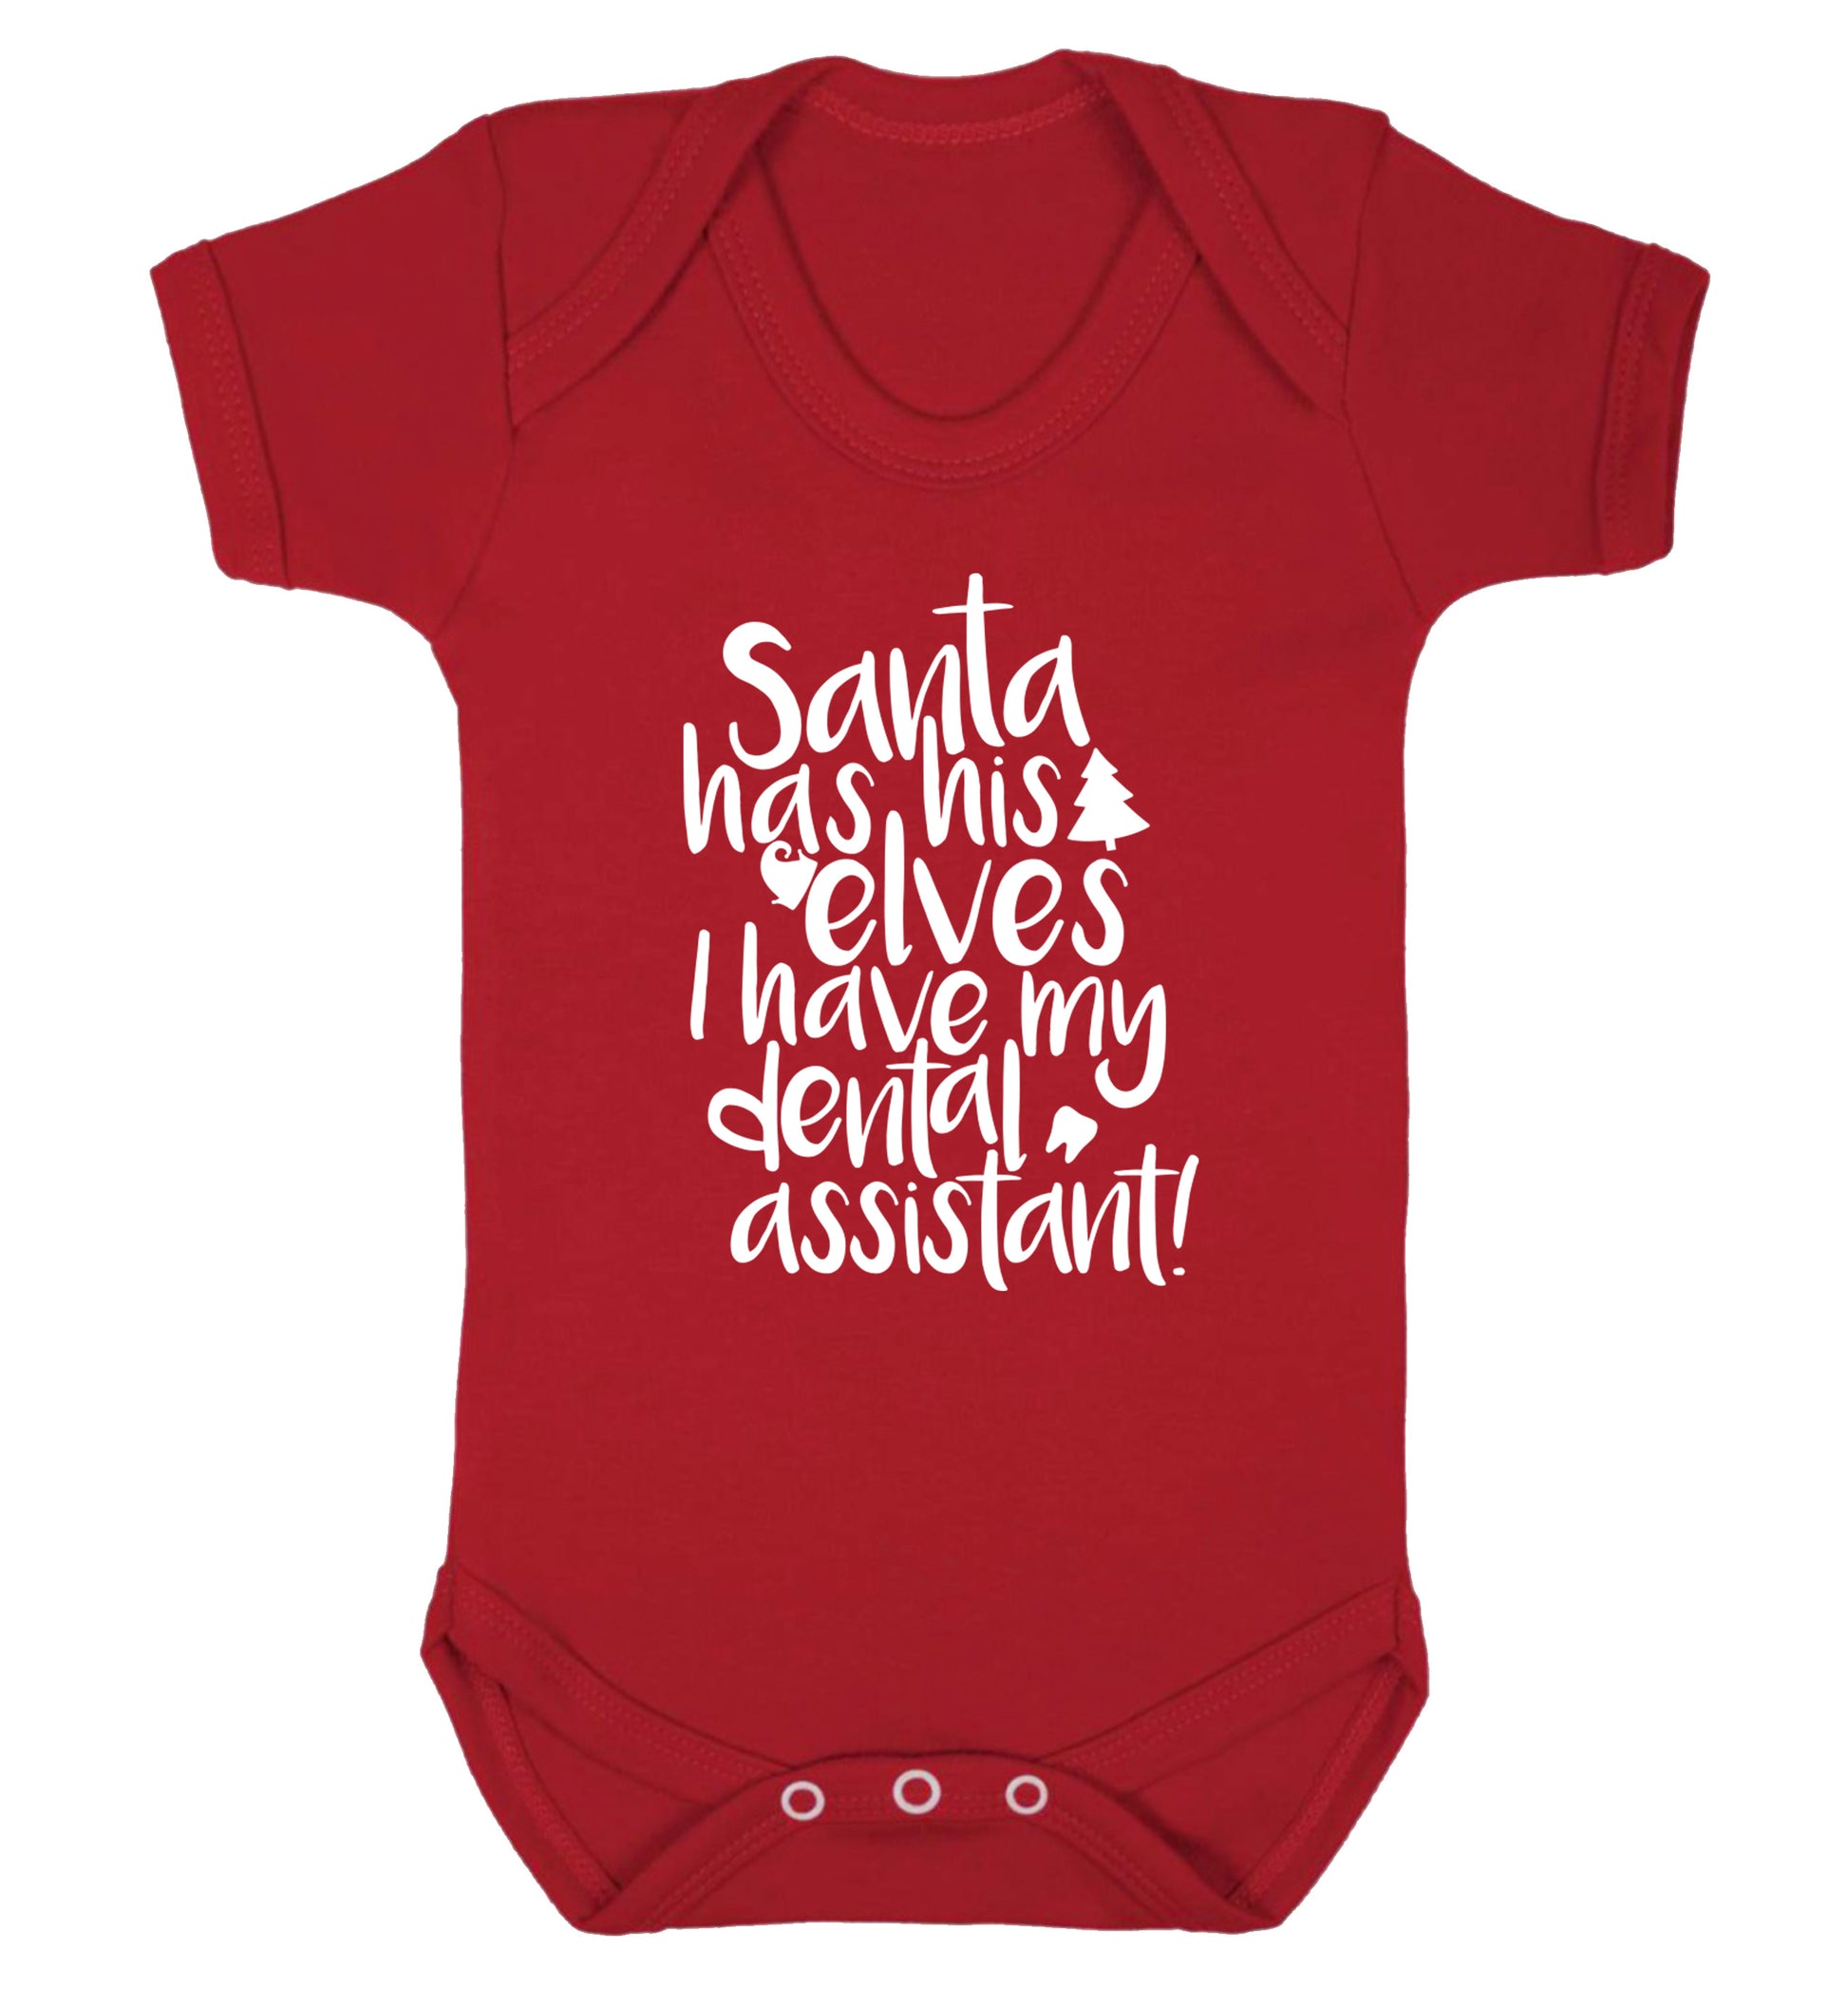 Santa has his elves I have my dental assistant Baby Vest red 18-24 months